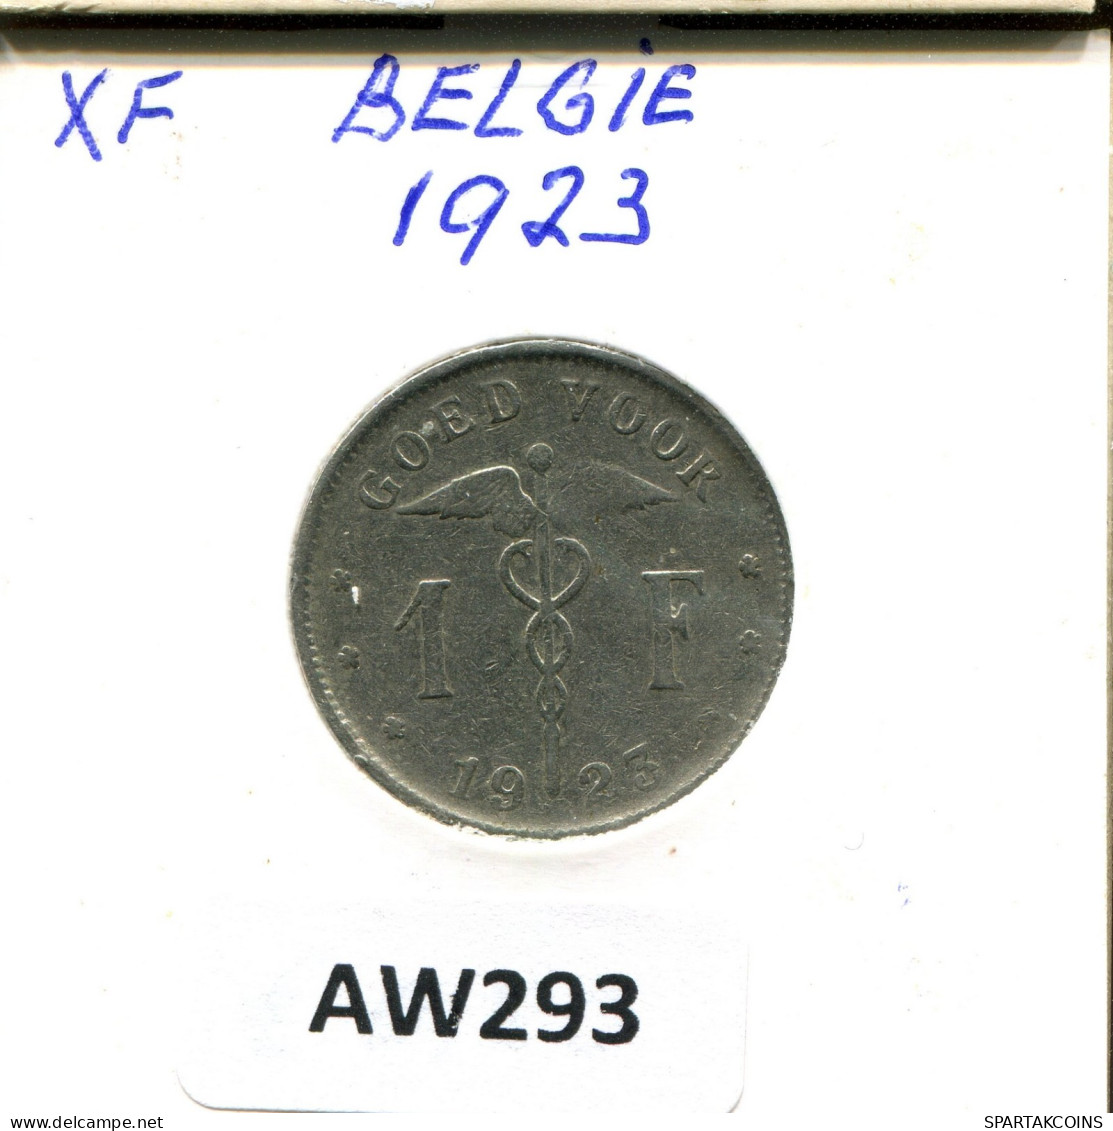 1 FRANC 1923 DUTCH Text BELGIQUE BELGIUM Pièce #AW293.F.A - 1 Frank